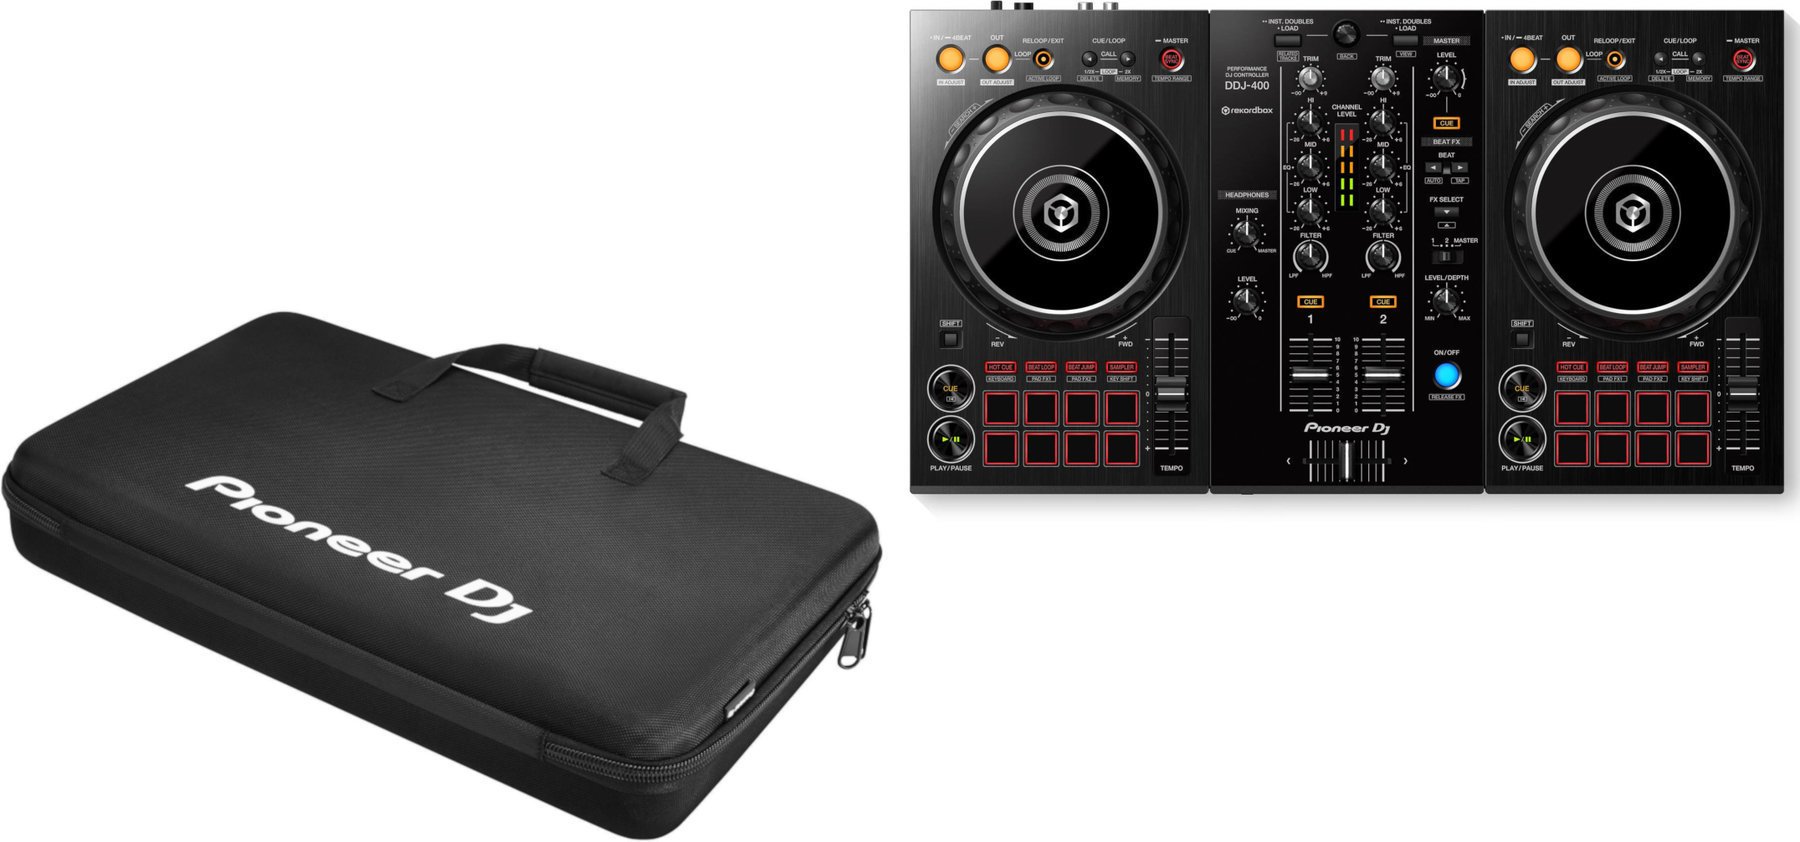 DJ Controller Pioneer Dj DDJ-400-DJC-B SET DJ Controller